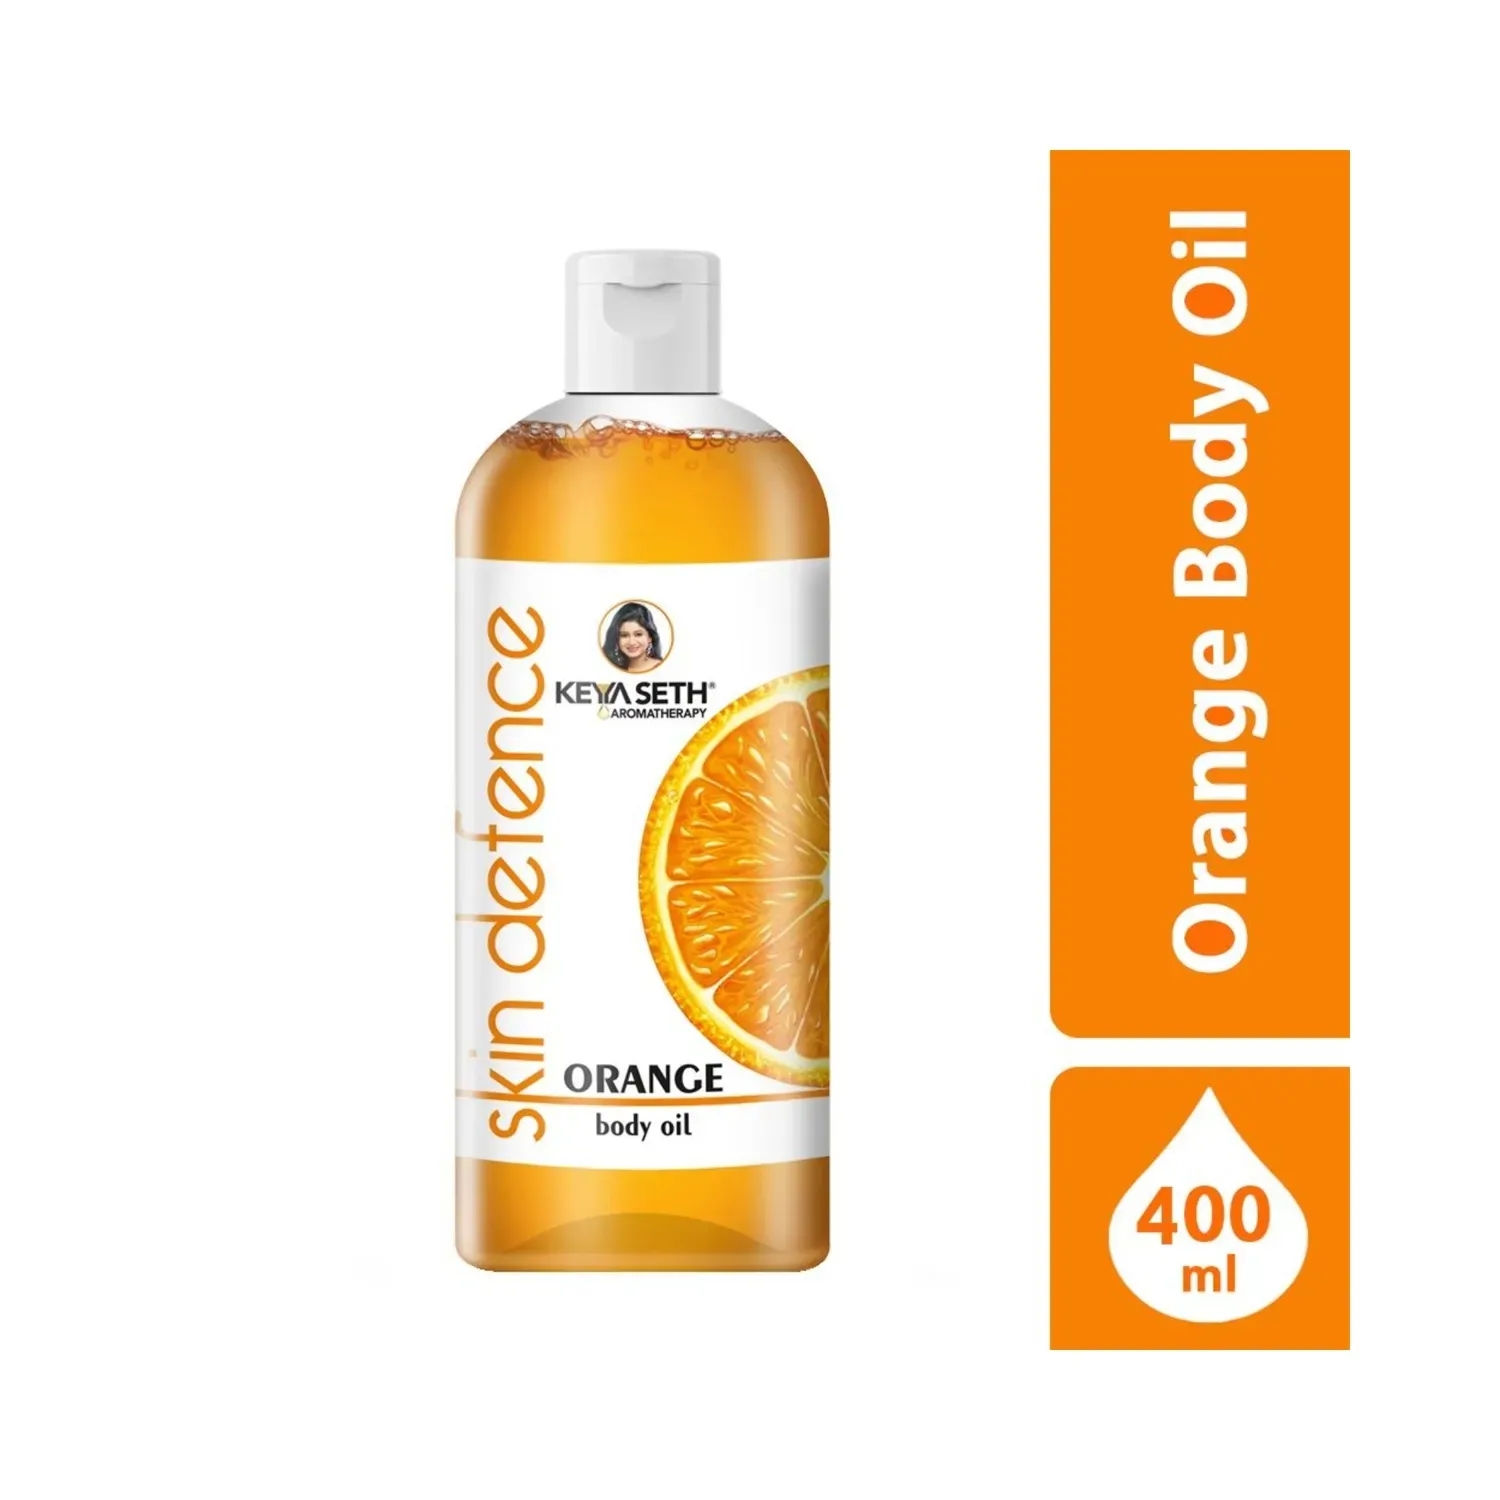 Keya Seth Aromatherapy | Keya Seth Aromatherapy Skin Defence Orange Body Oil (400ml)